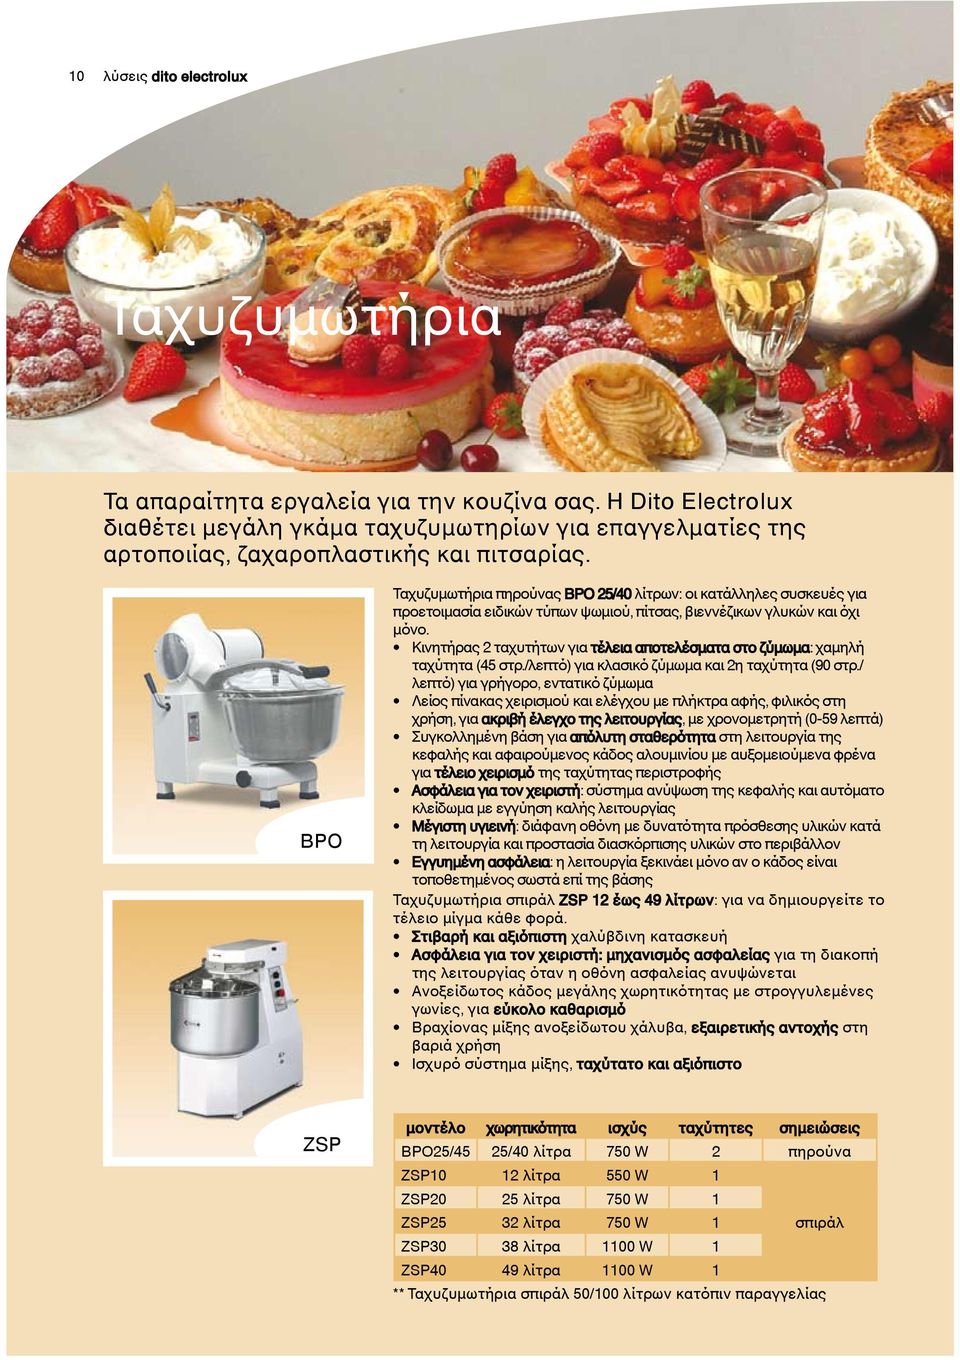 BPO Ταχυζυμωτήρια πηρούνας BPO 25/40 λίτρων: οι κατάλληλες συσκευές για προετοιμασία ειδικών τύπων ψωμιού, πίτσας, βιεννέζικων γλυκών και όχι μόνο.